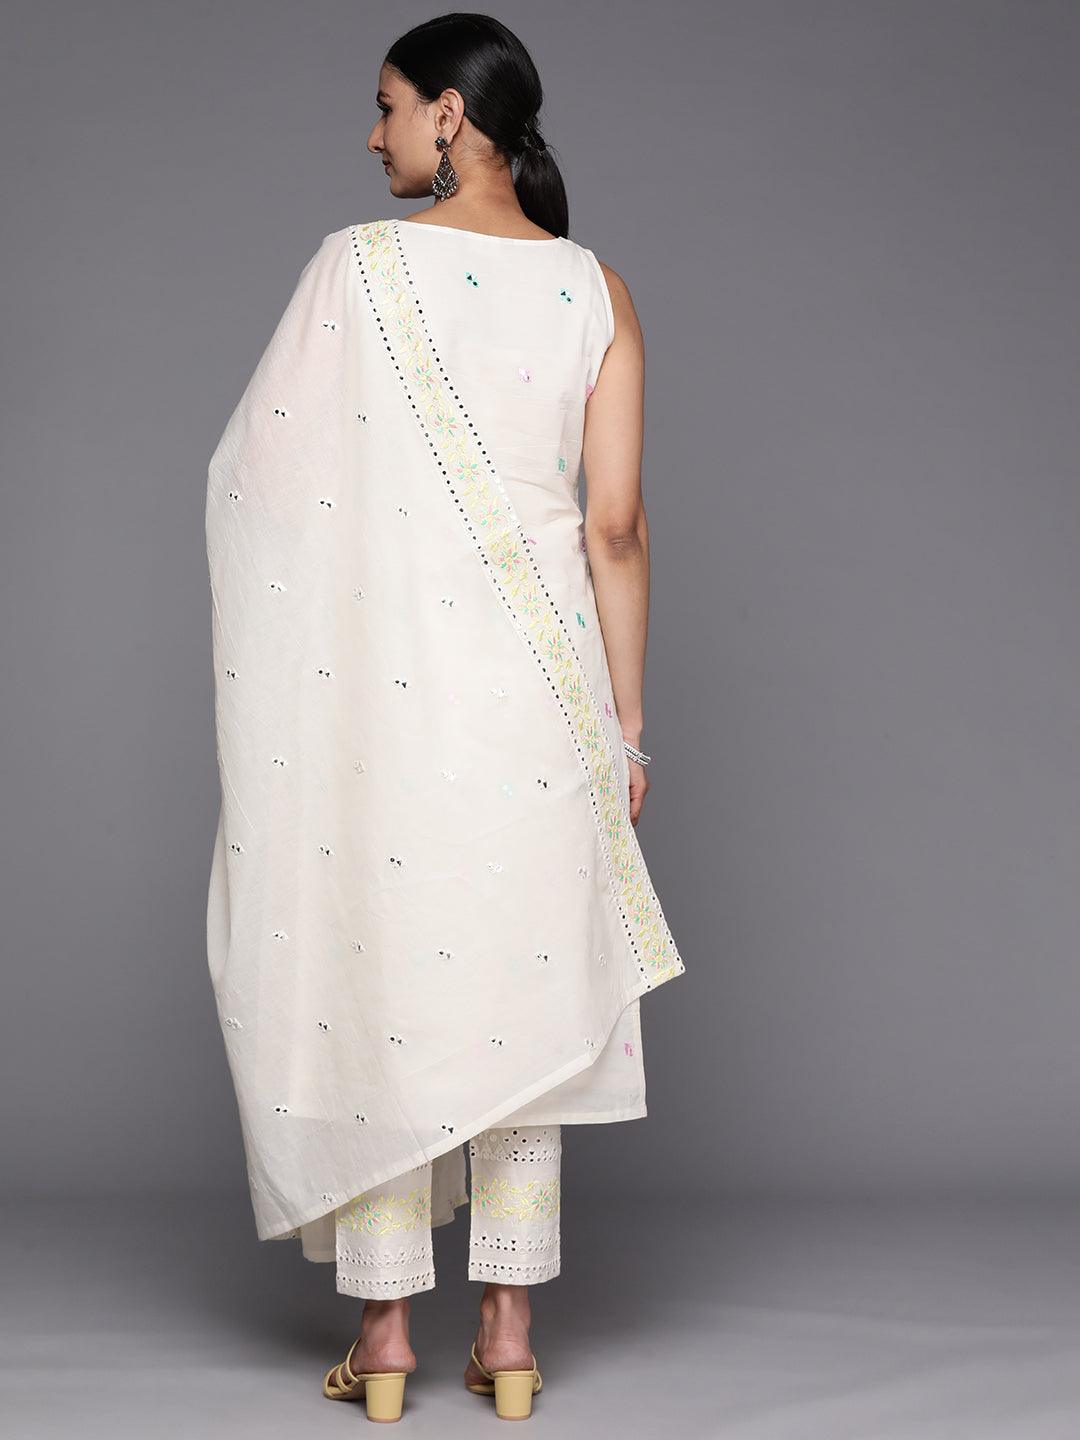 Off-White Embroidered Cotton Straight Kurta With Dupatta